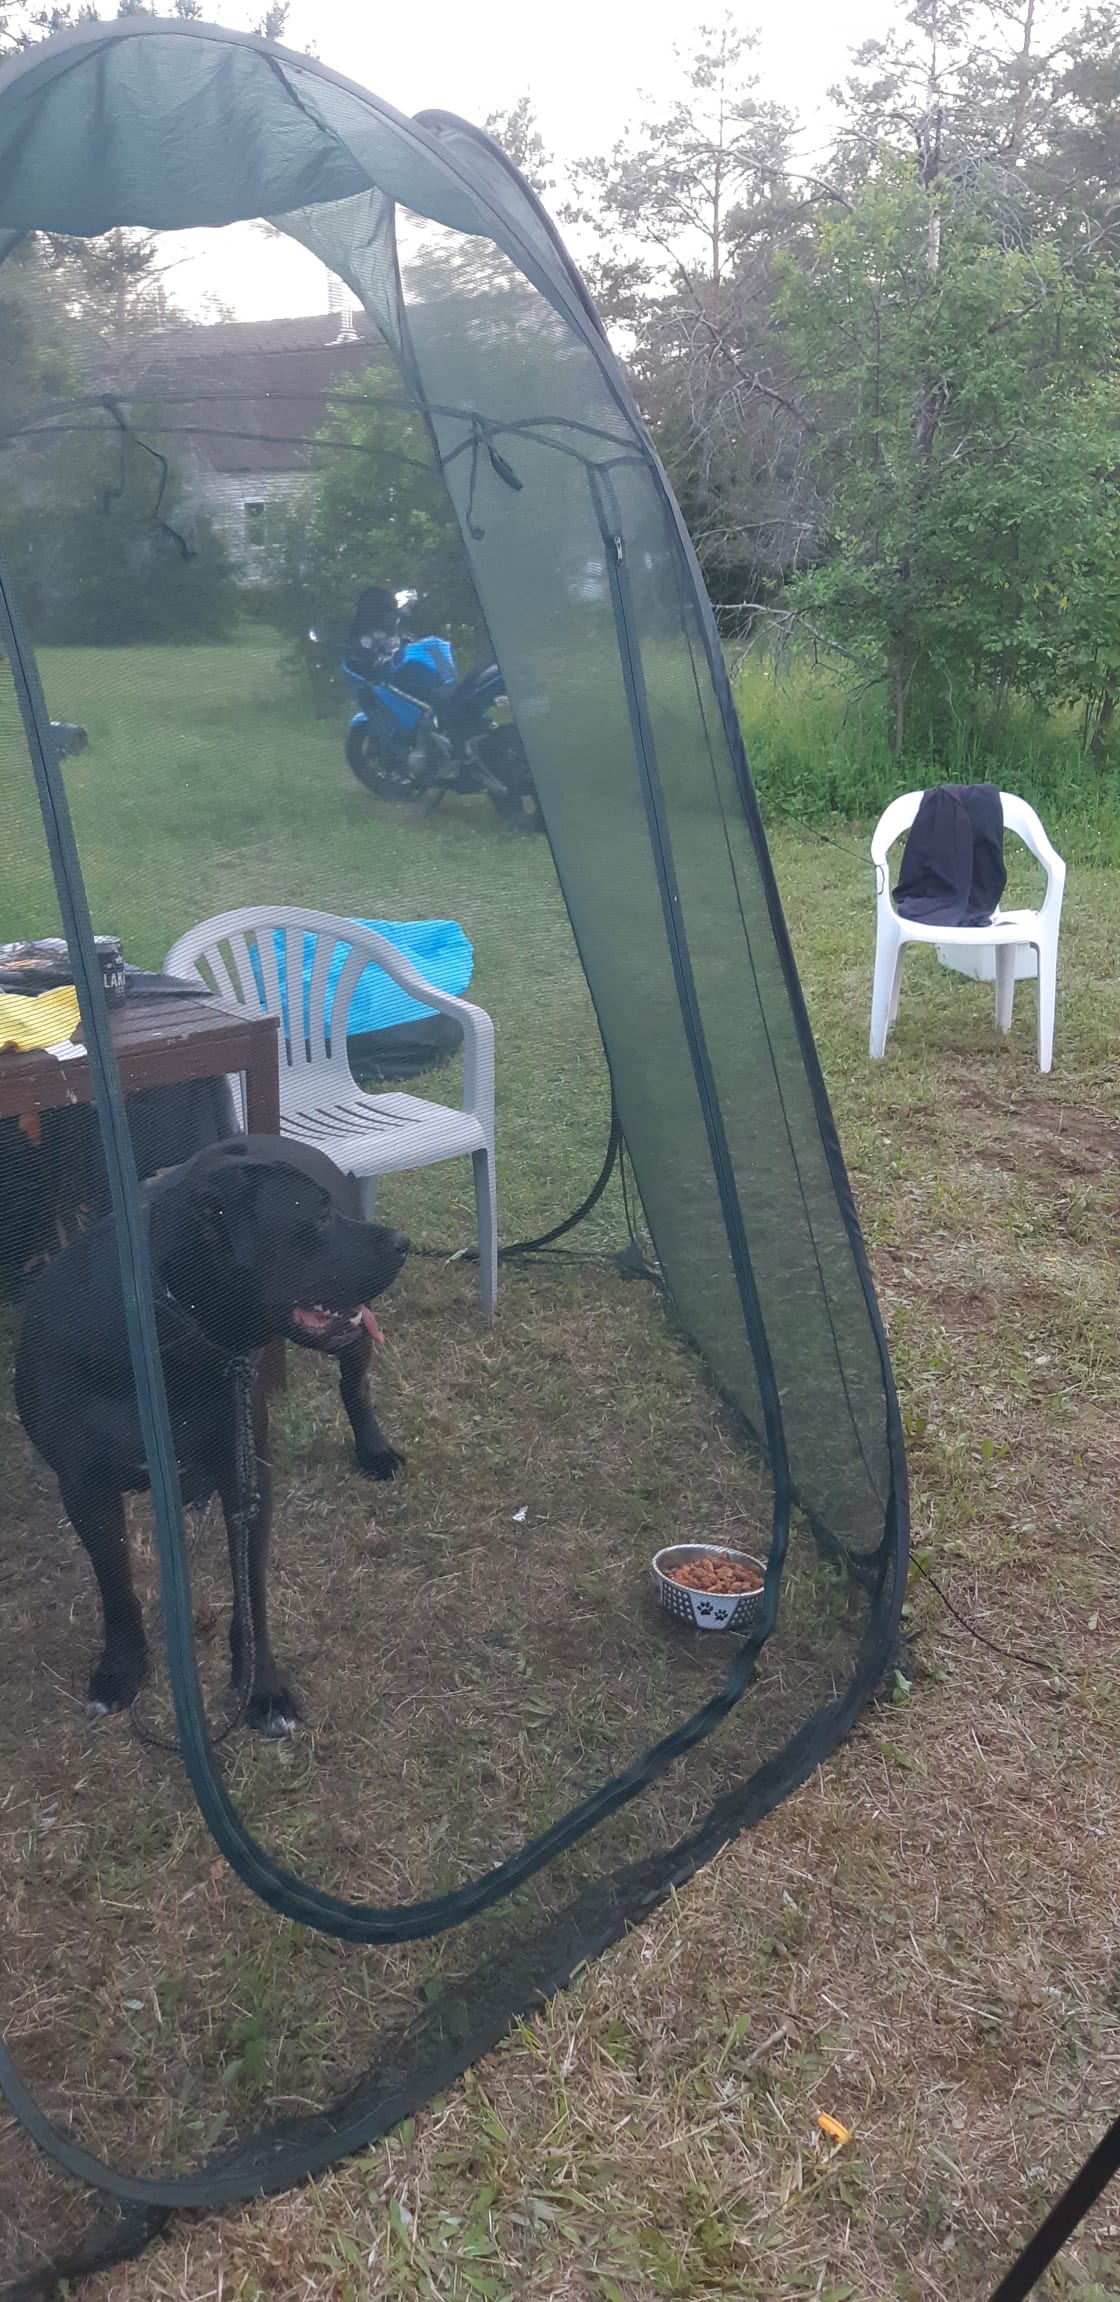 My dog enjoying the mosquito tent 